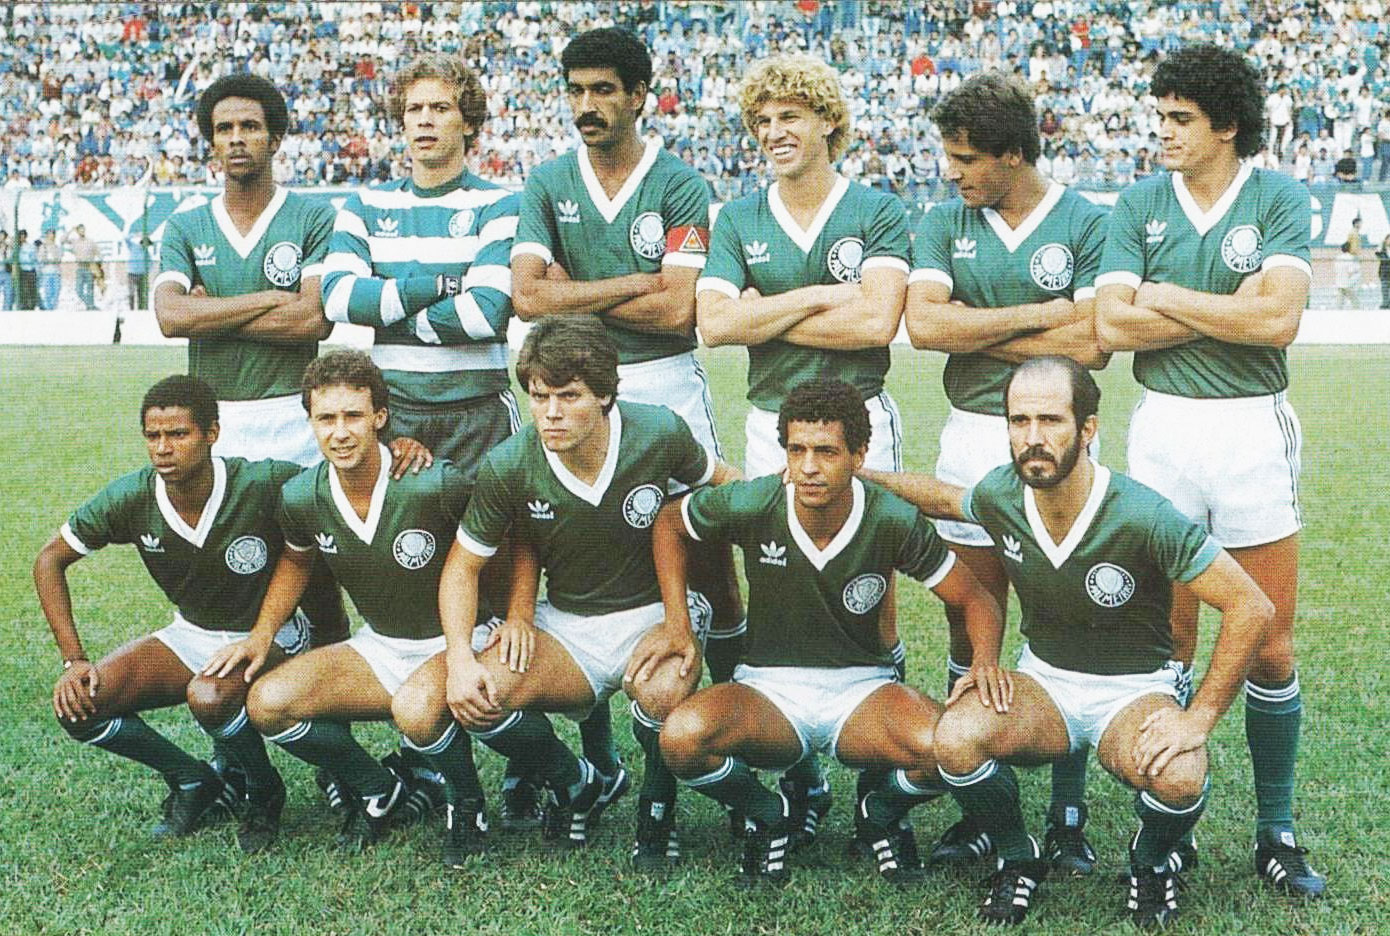 Campeões do Campeonato Paulista Feminino (1984 - 2021) 